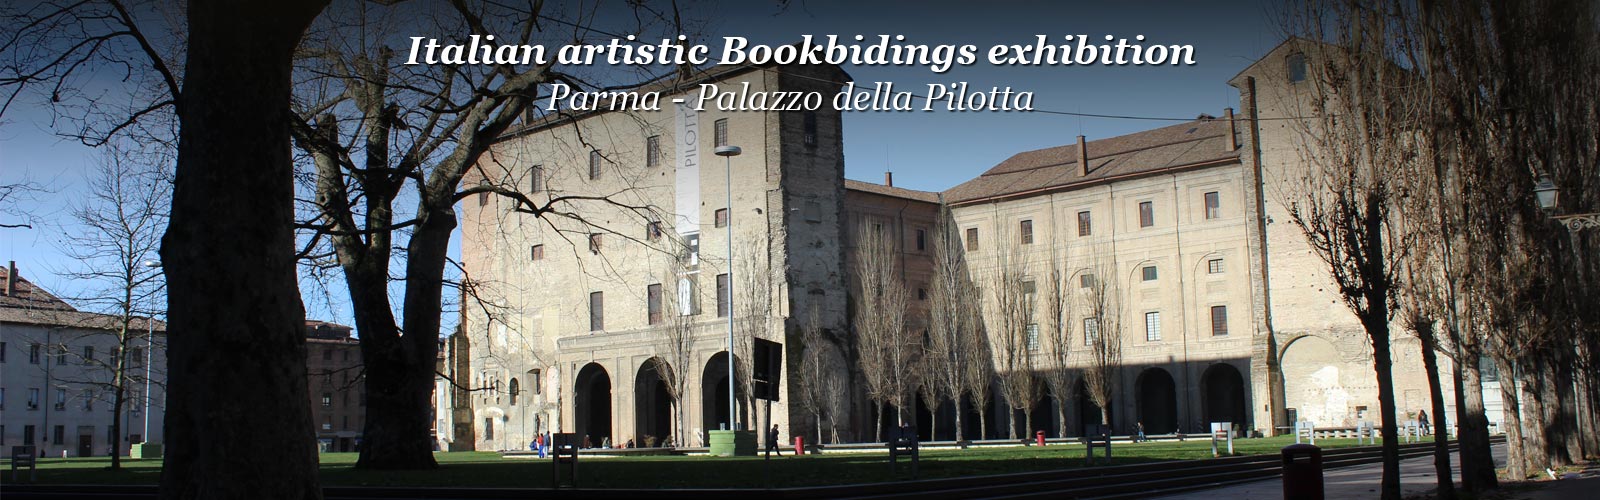 italian artistic bookbidings exhibition